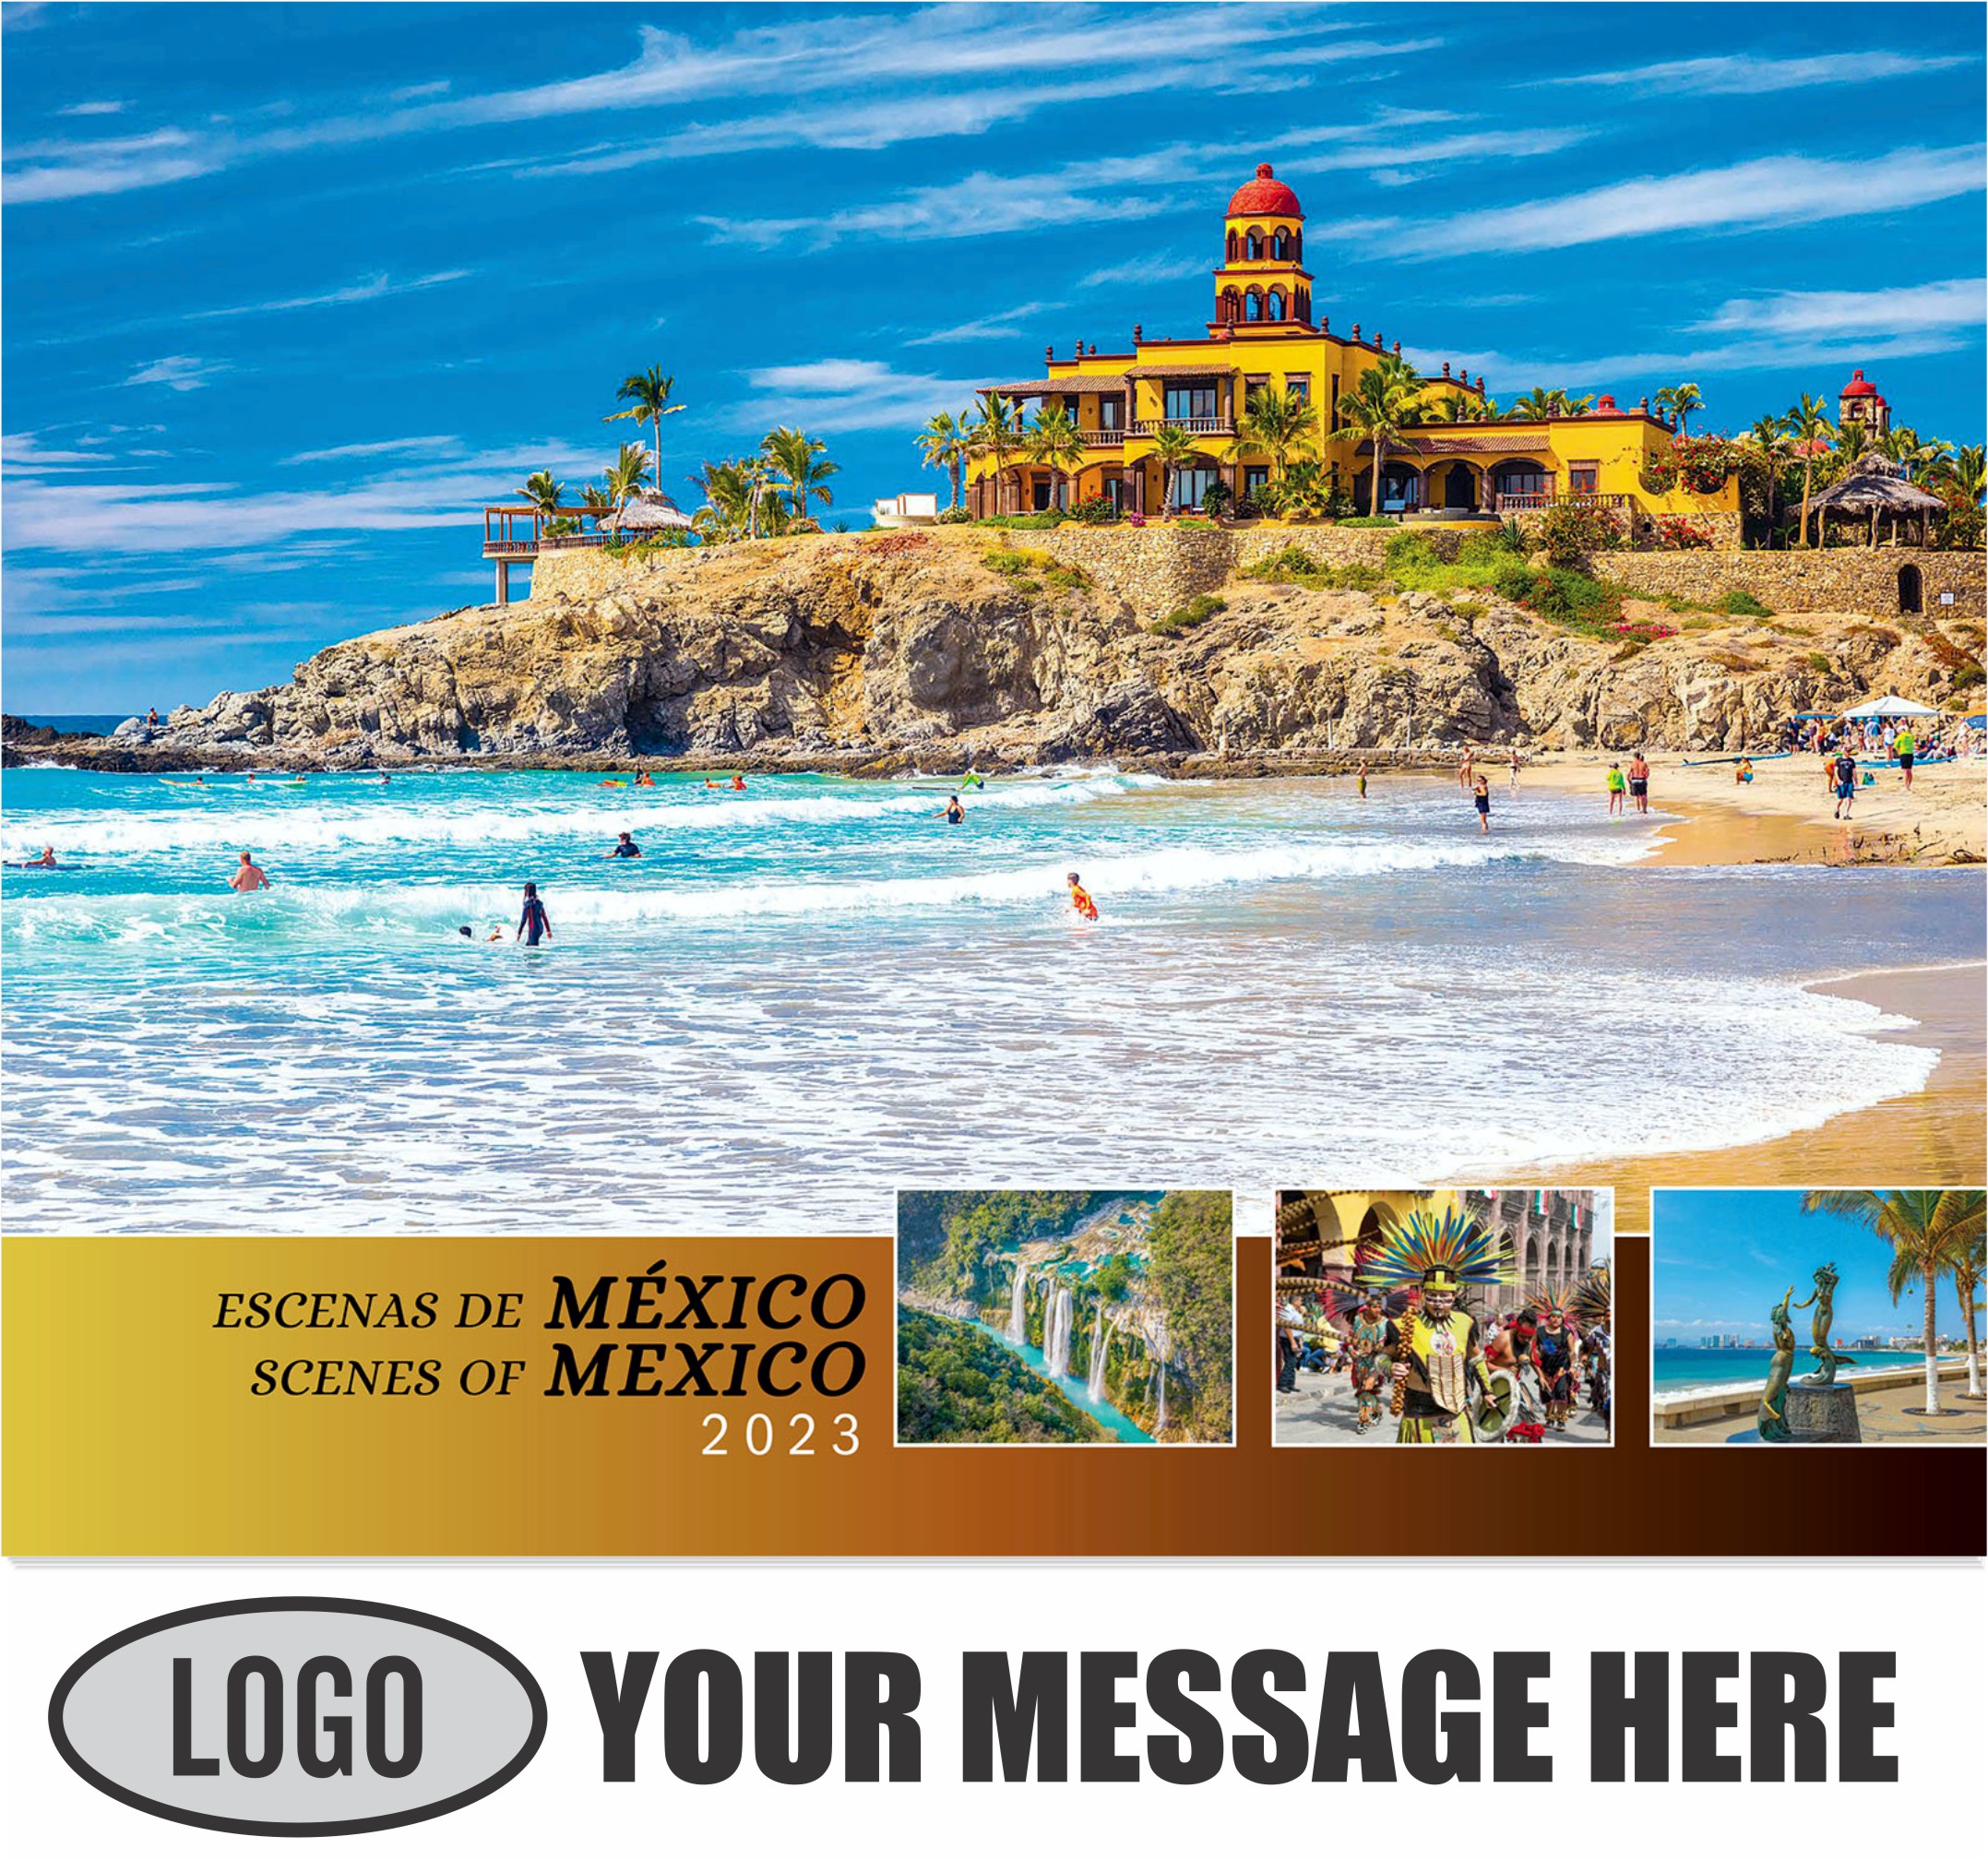 2023 Scenes of Mexico (Spanish-English bilingual) Promotional Calendar